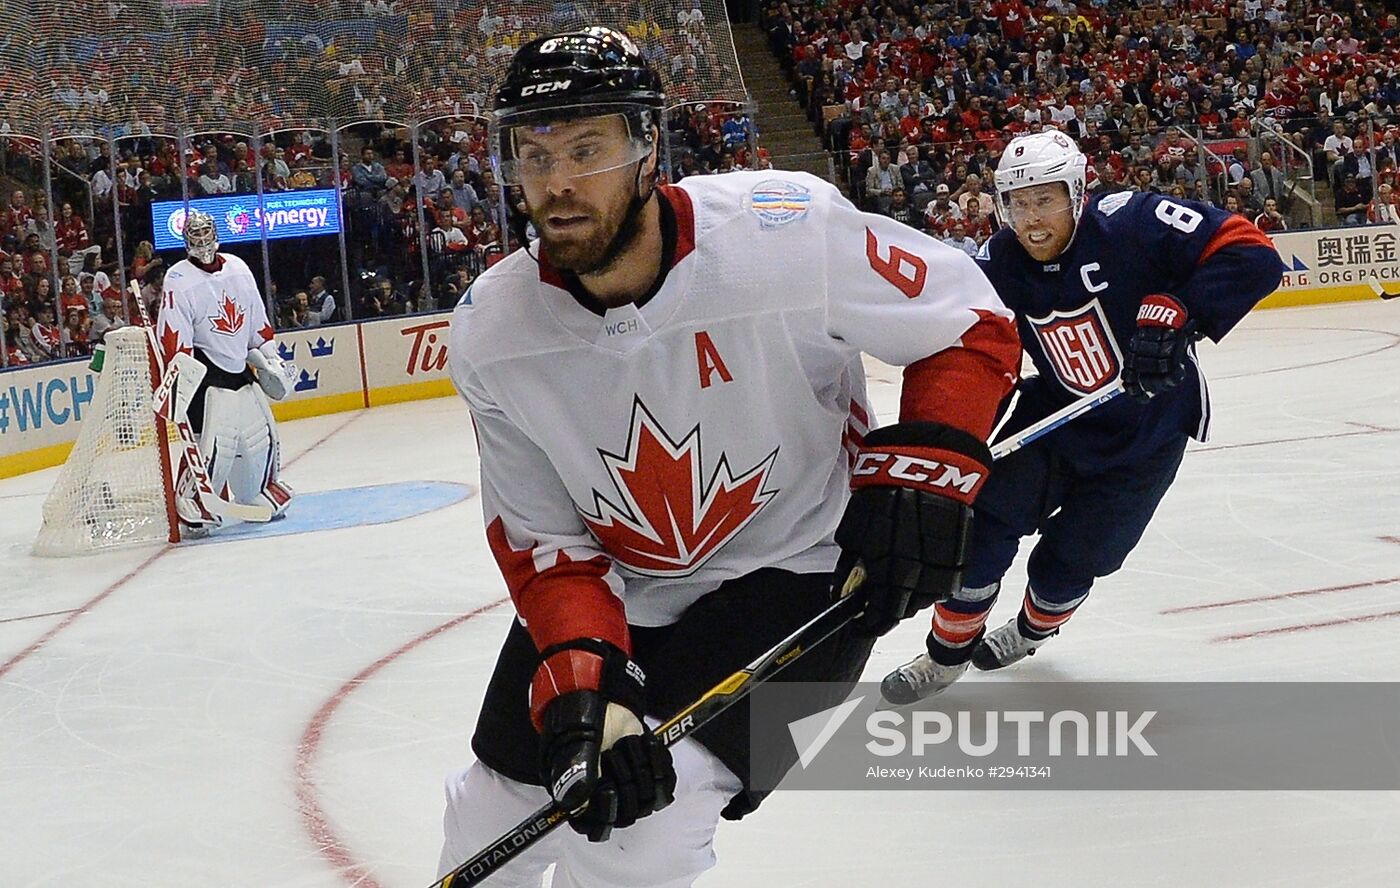 2016 World Cup of Hockey. USA vs. Canada